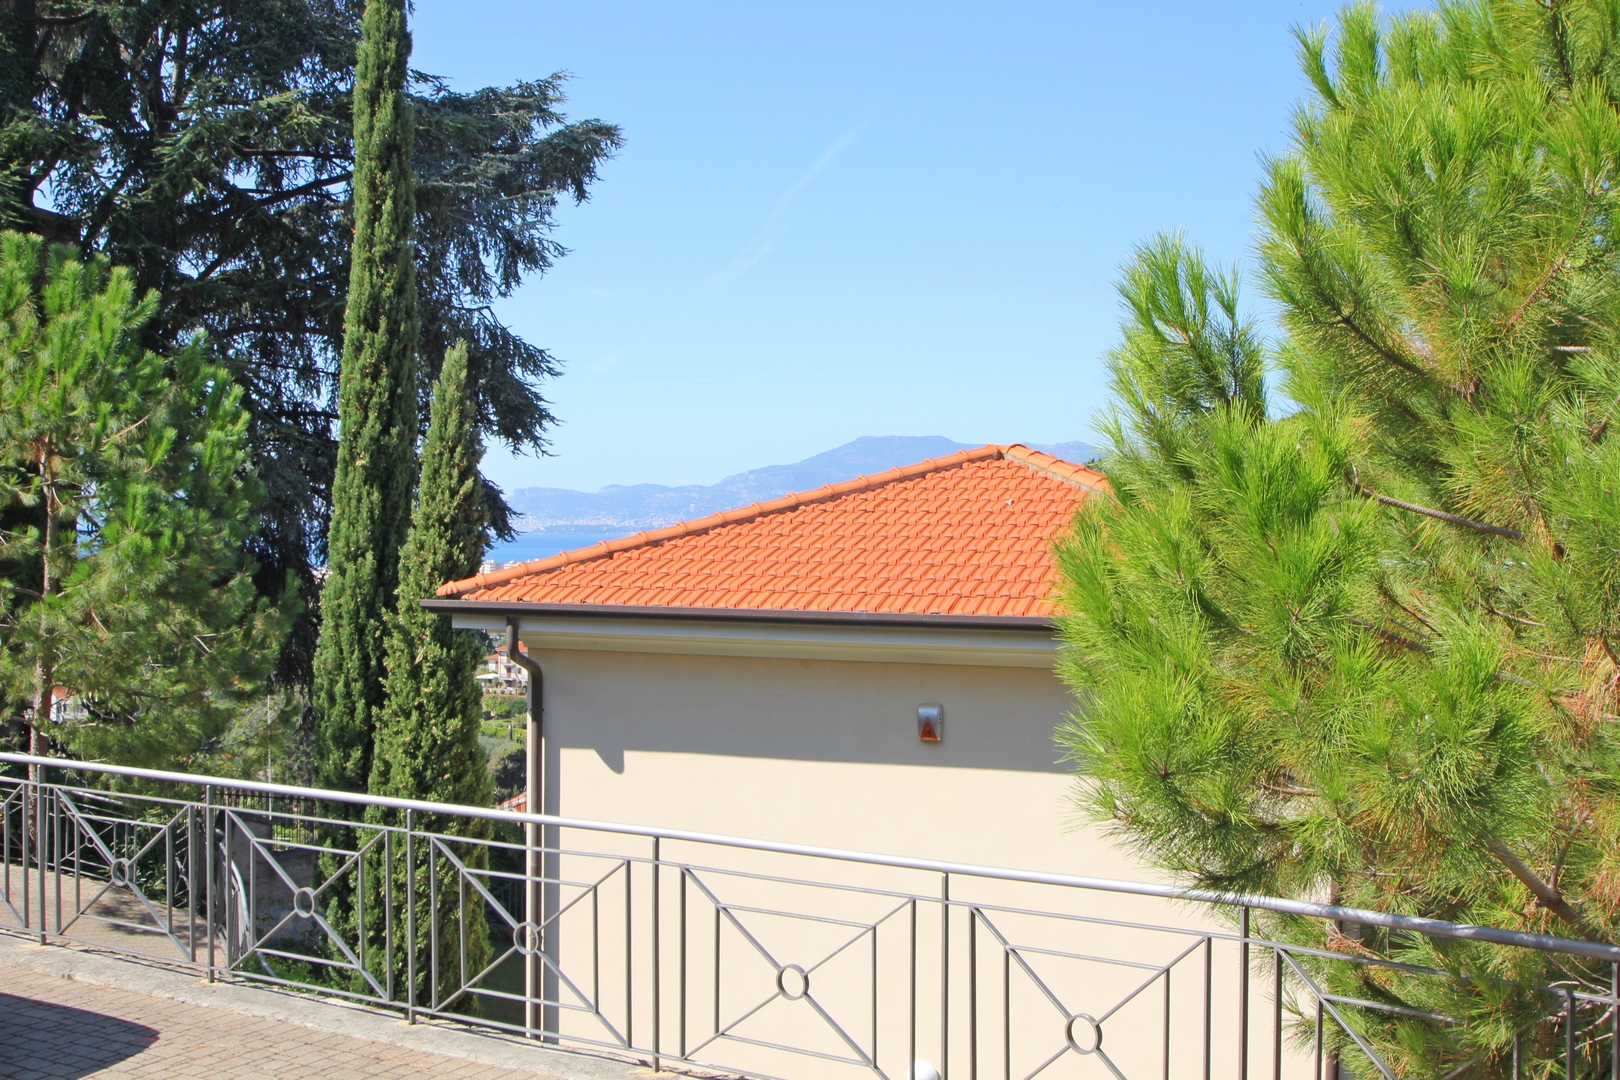 New villa in Bordighera